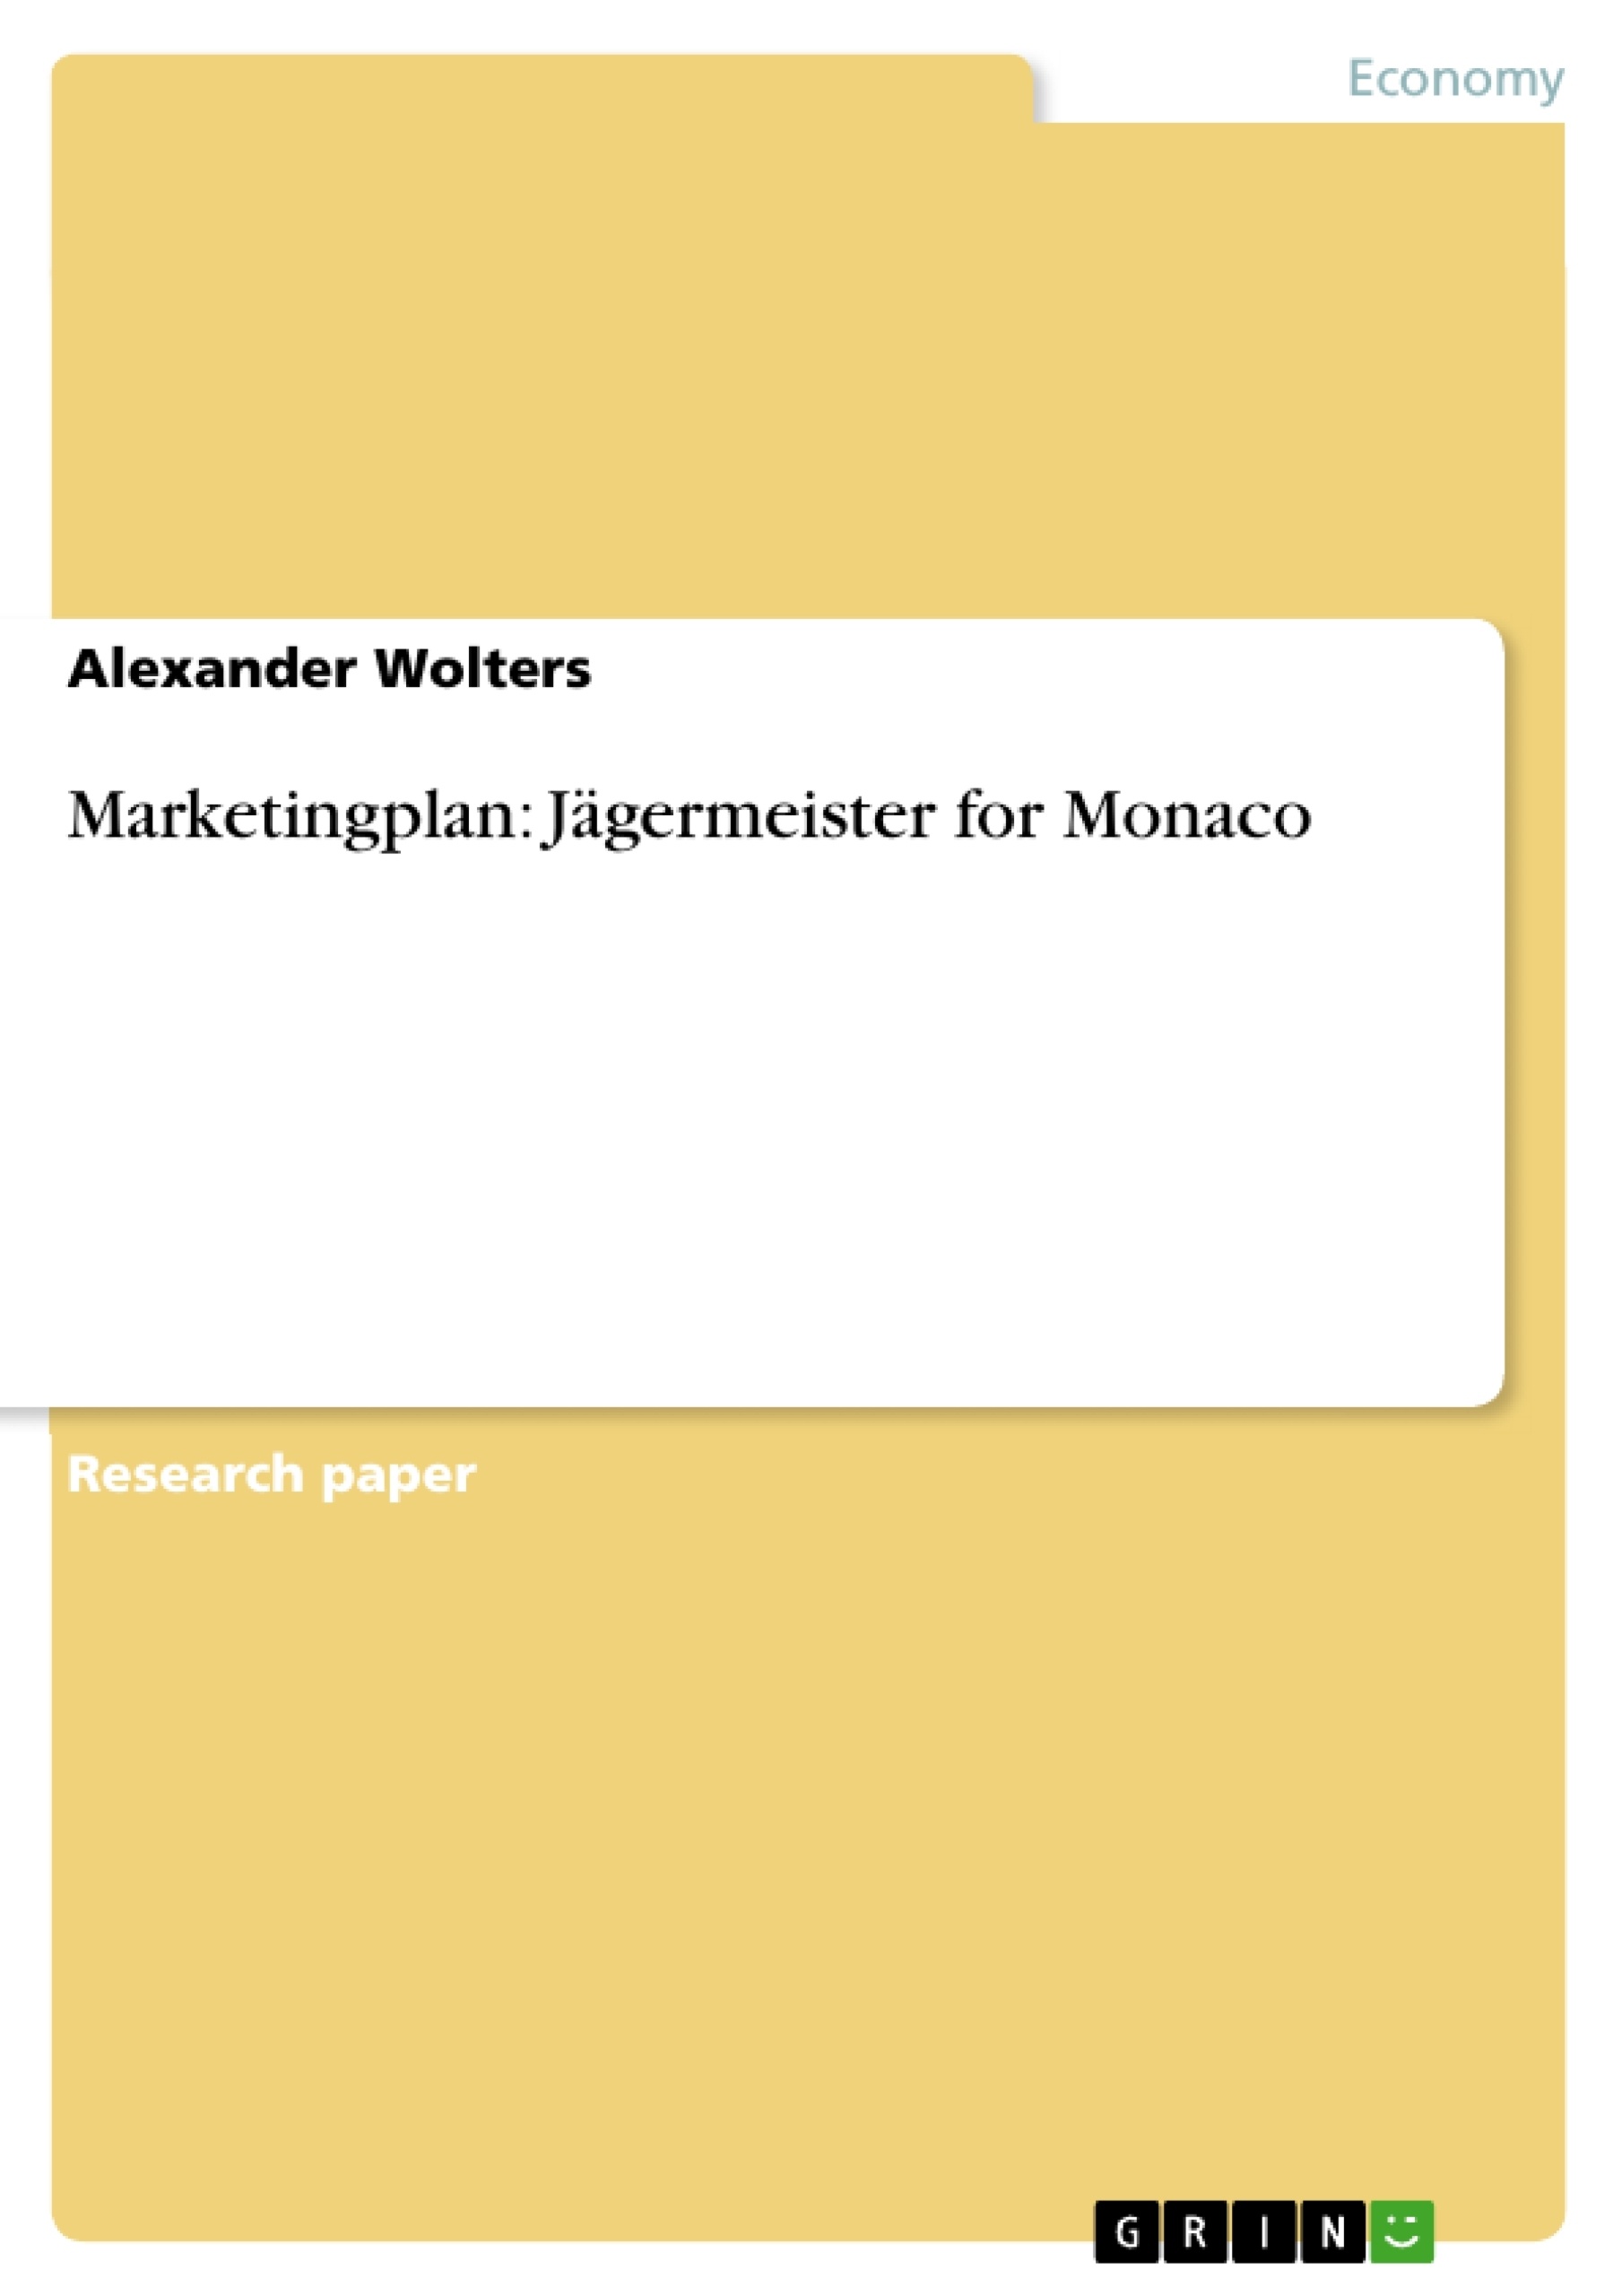 Título: Marketingplan: Jägermeister for Monaco